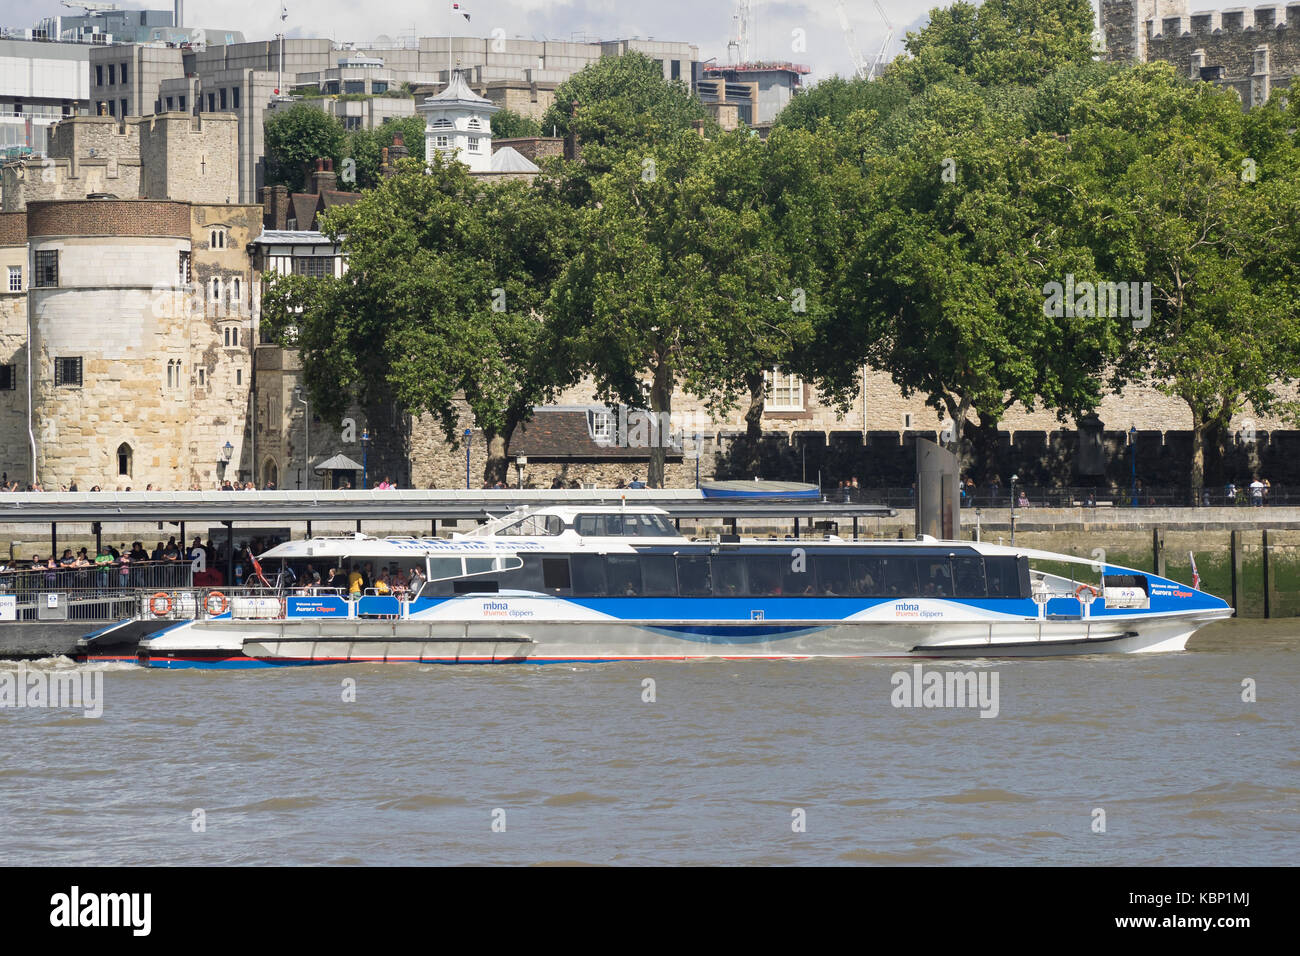 LONDON, Großbritannien - 18. AUGUST 2017: Thames Clipper River Bus am Tower Pier am Tower of London Stockfoto